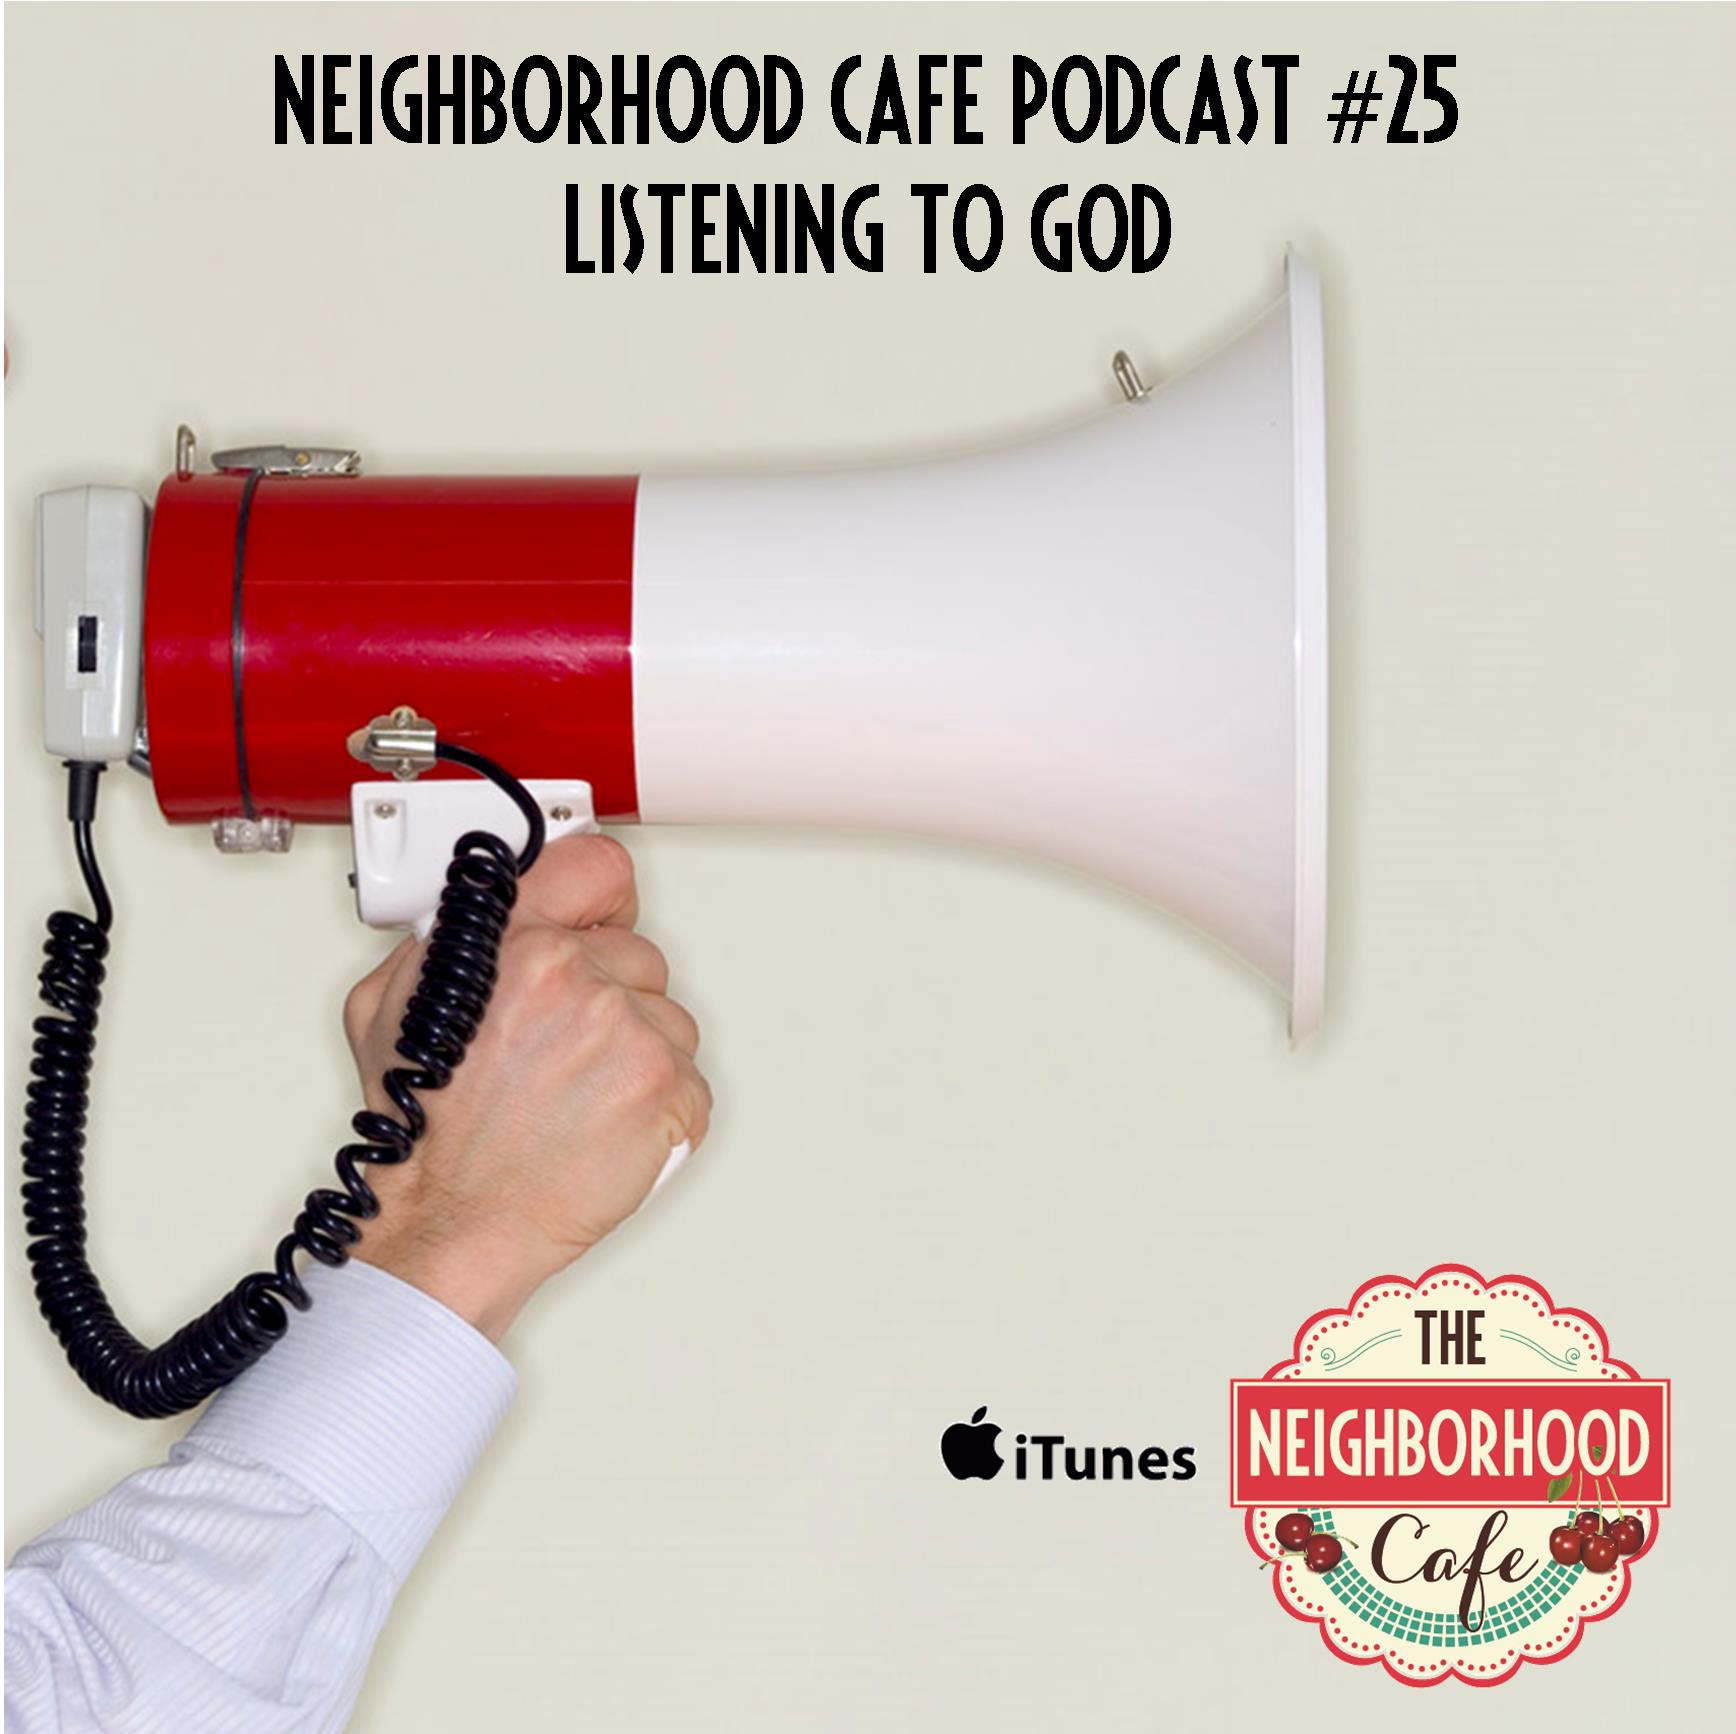 Neighborhood Cafe Podcast Episode #25